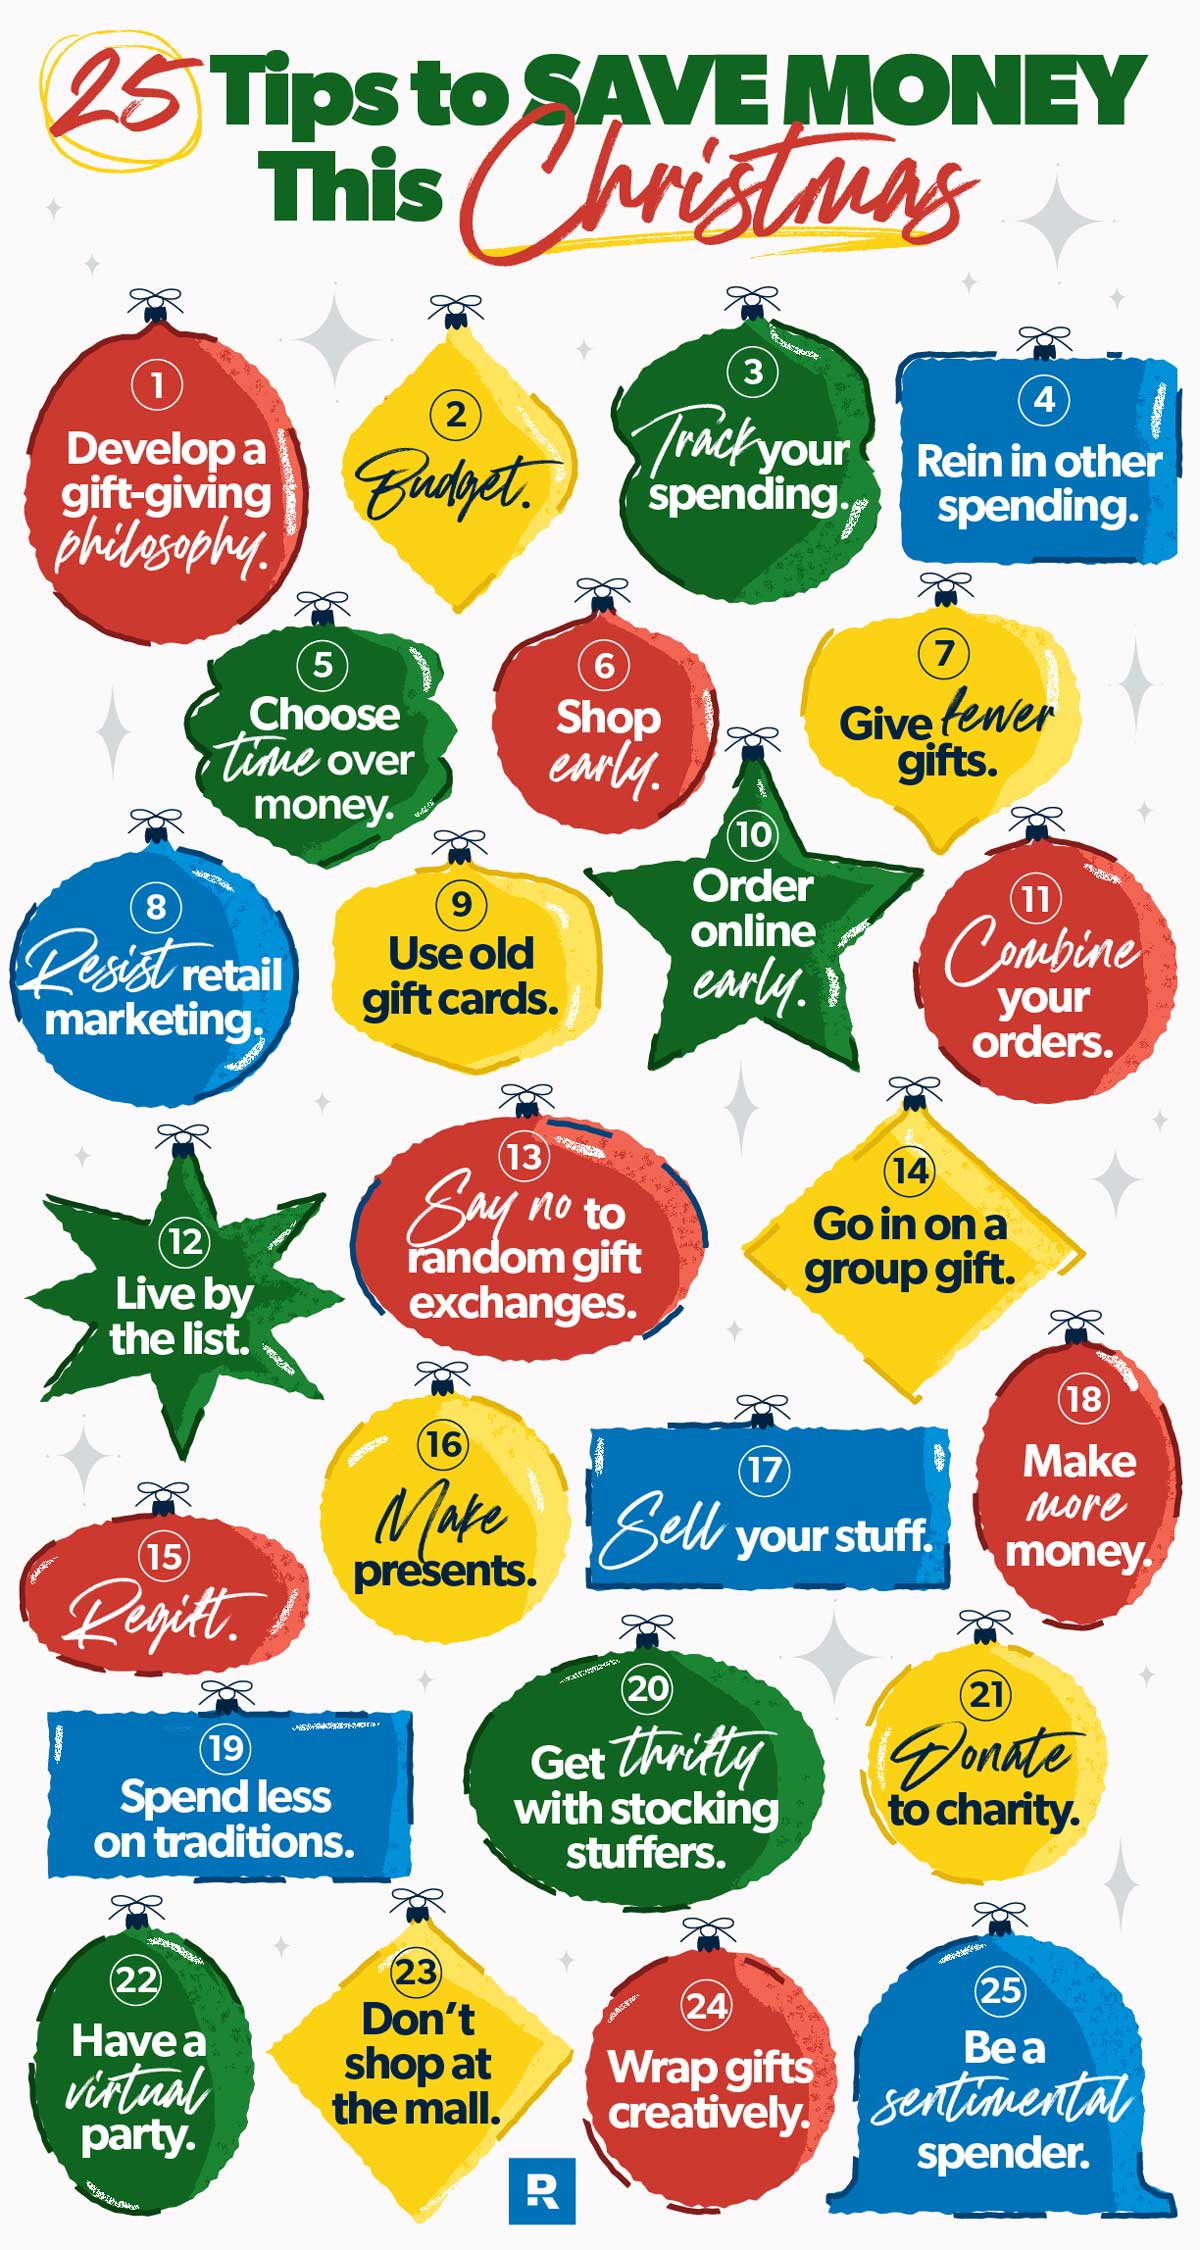 25 tips to save money this Christmas